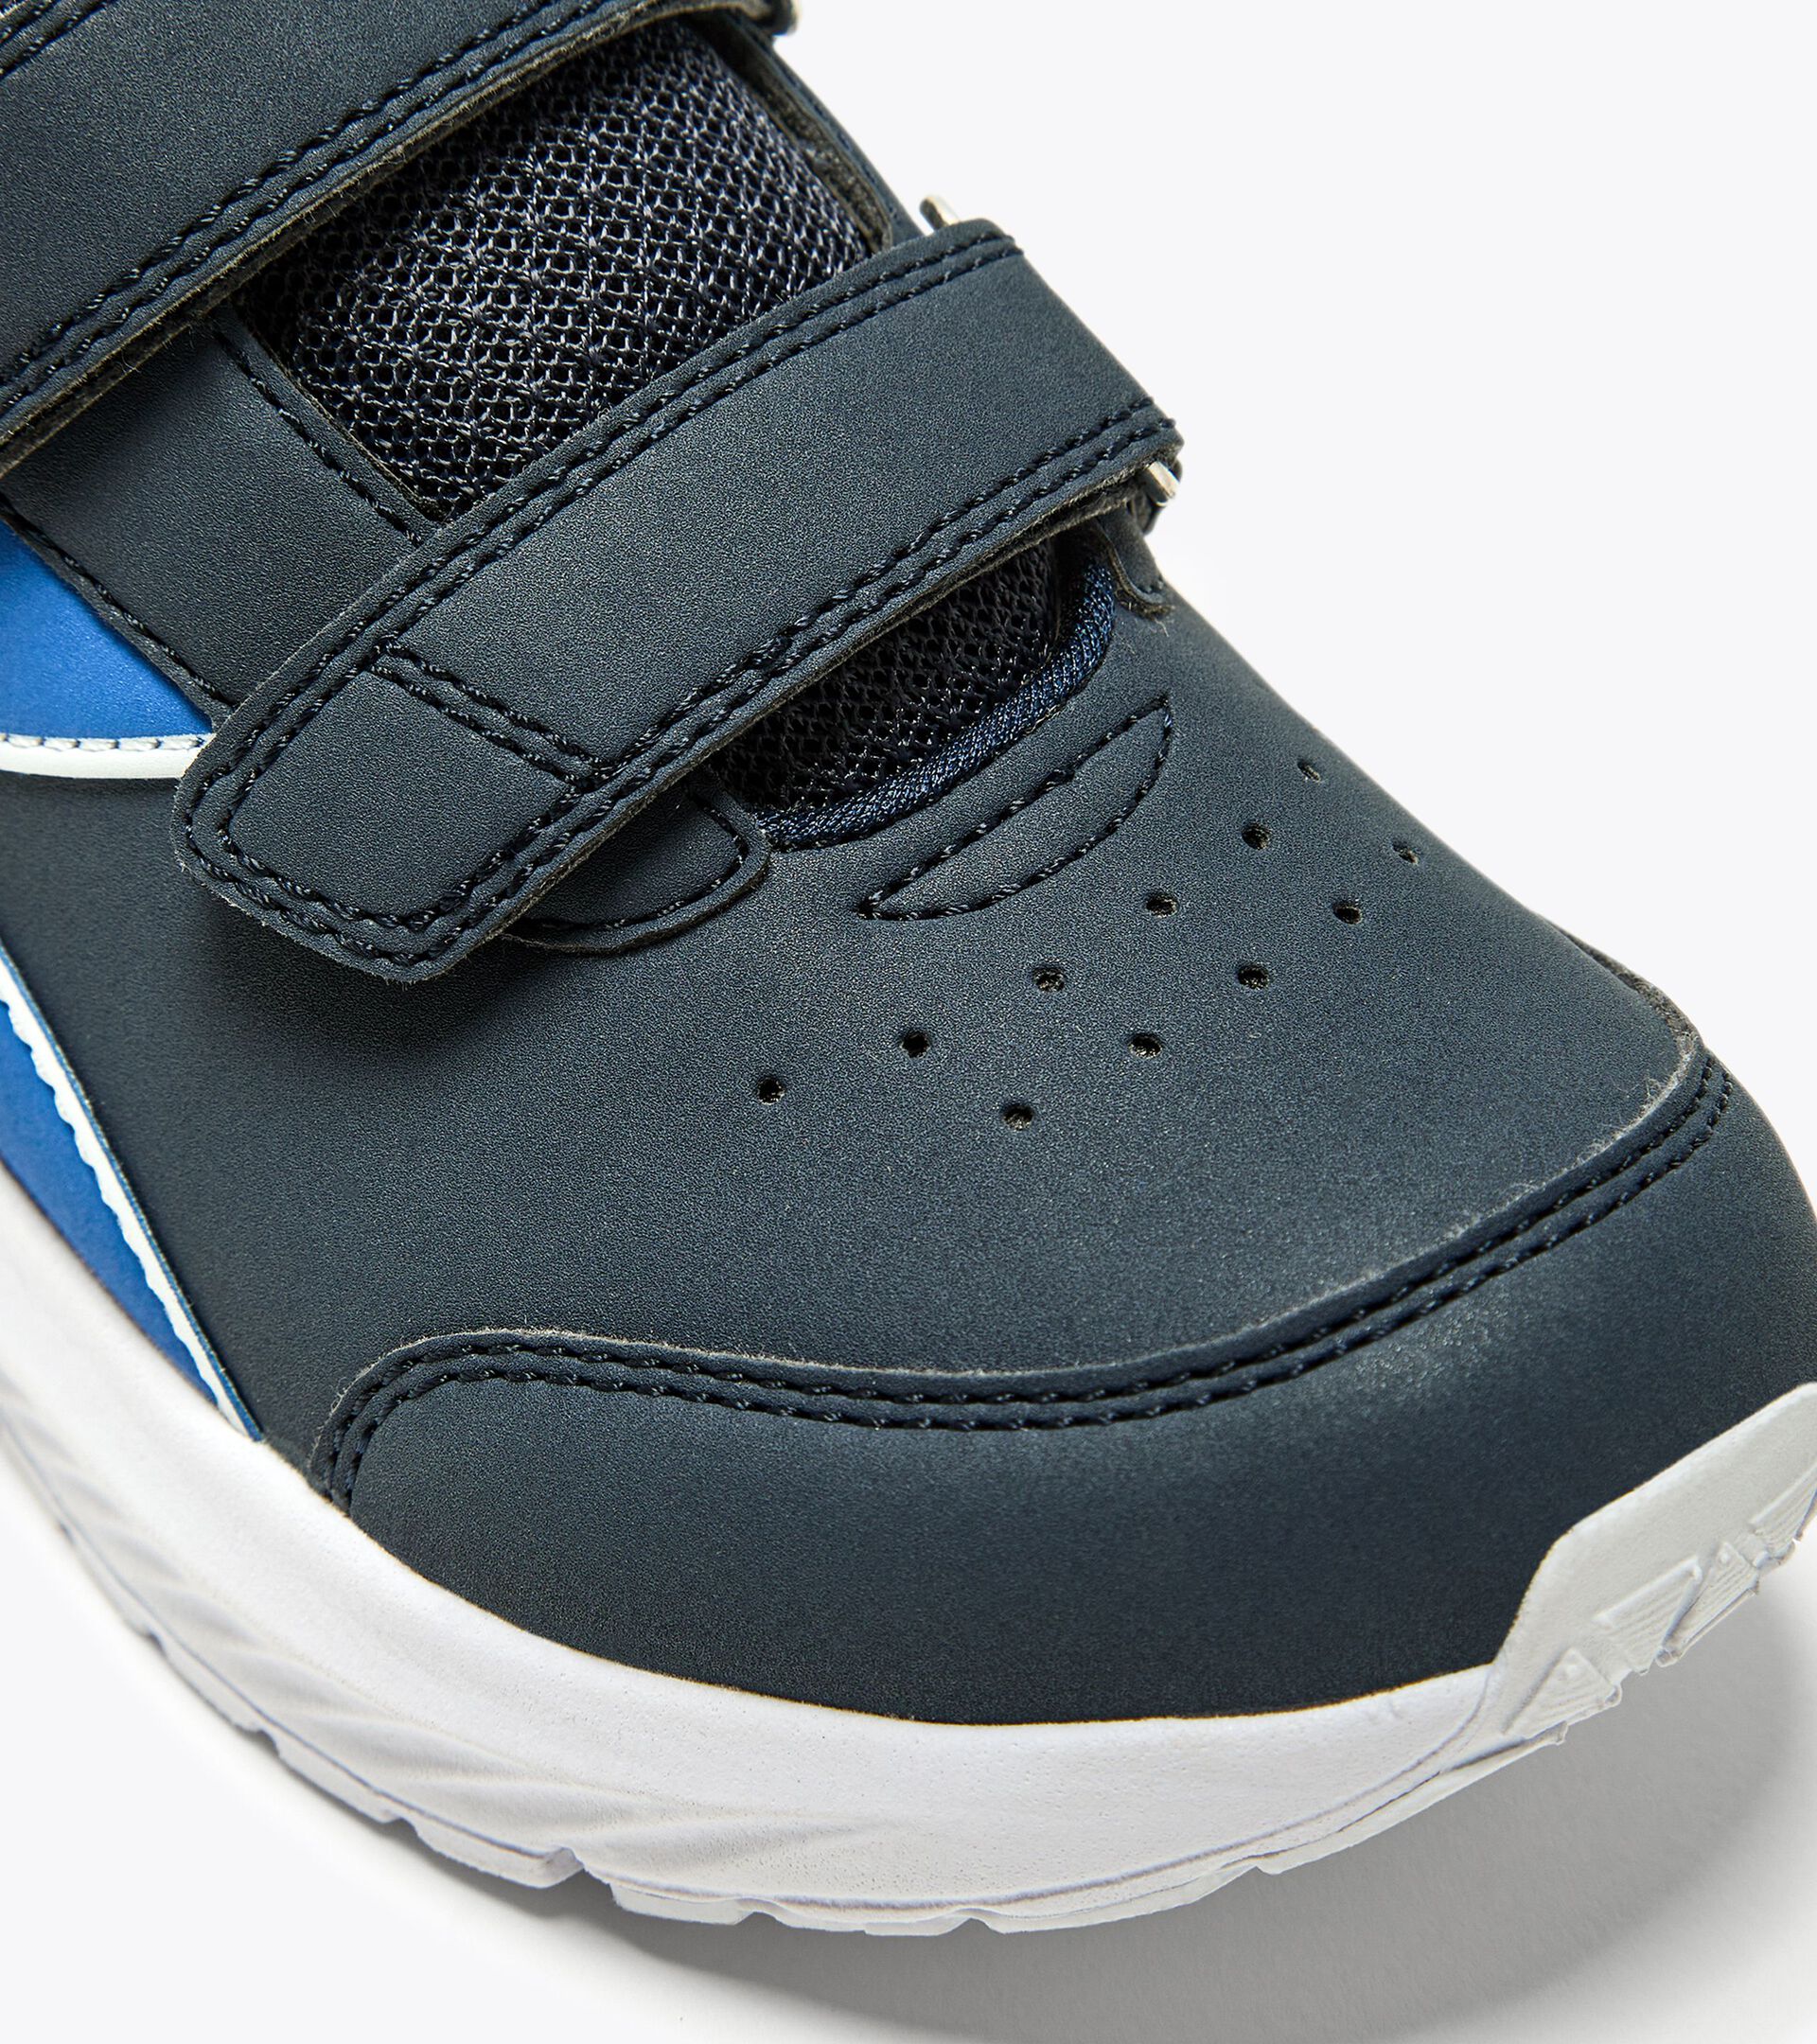 Sports shoe fod kids - 4 to 8 years - Gender Neutral FALCON 3 SL JR V BLUE CORSAIR/PRINCESS BLUE - Diadora